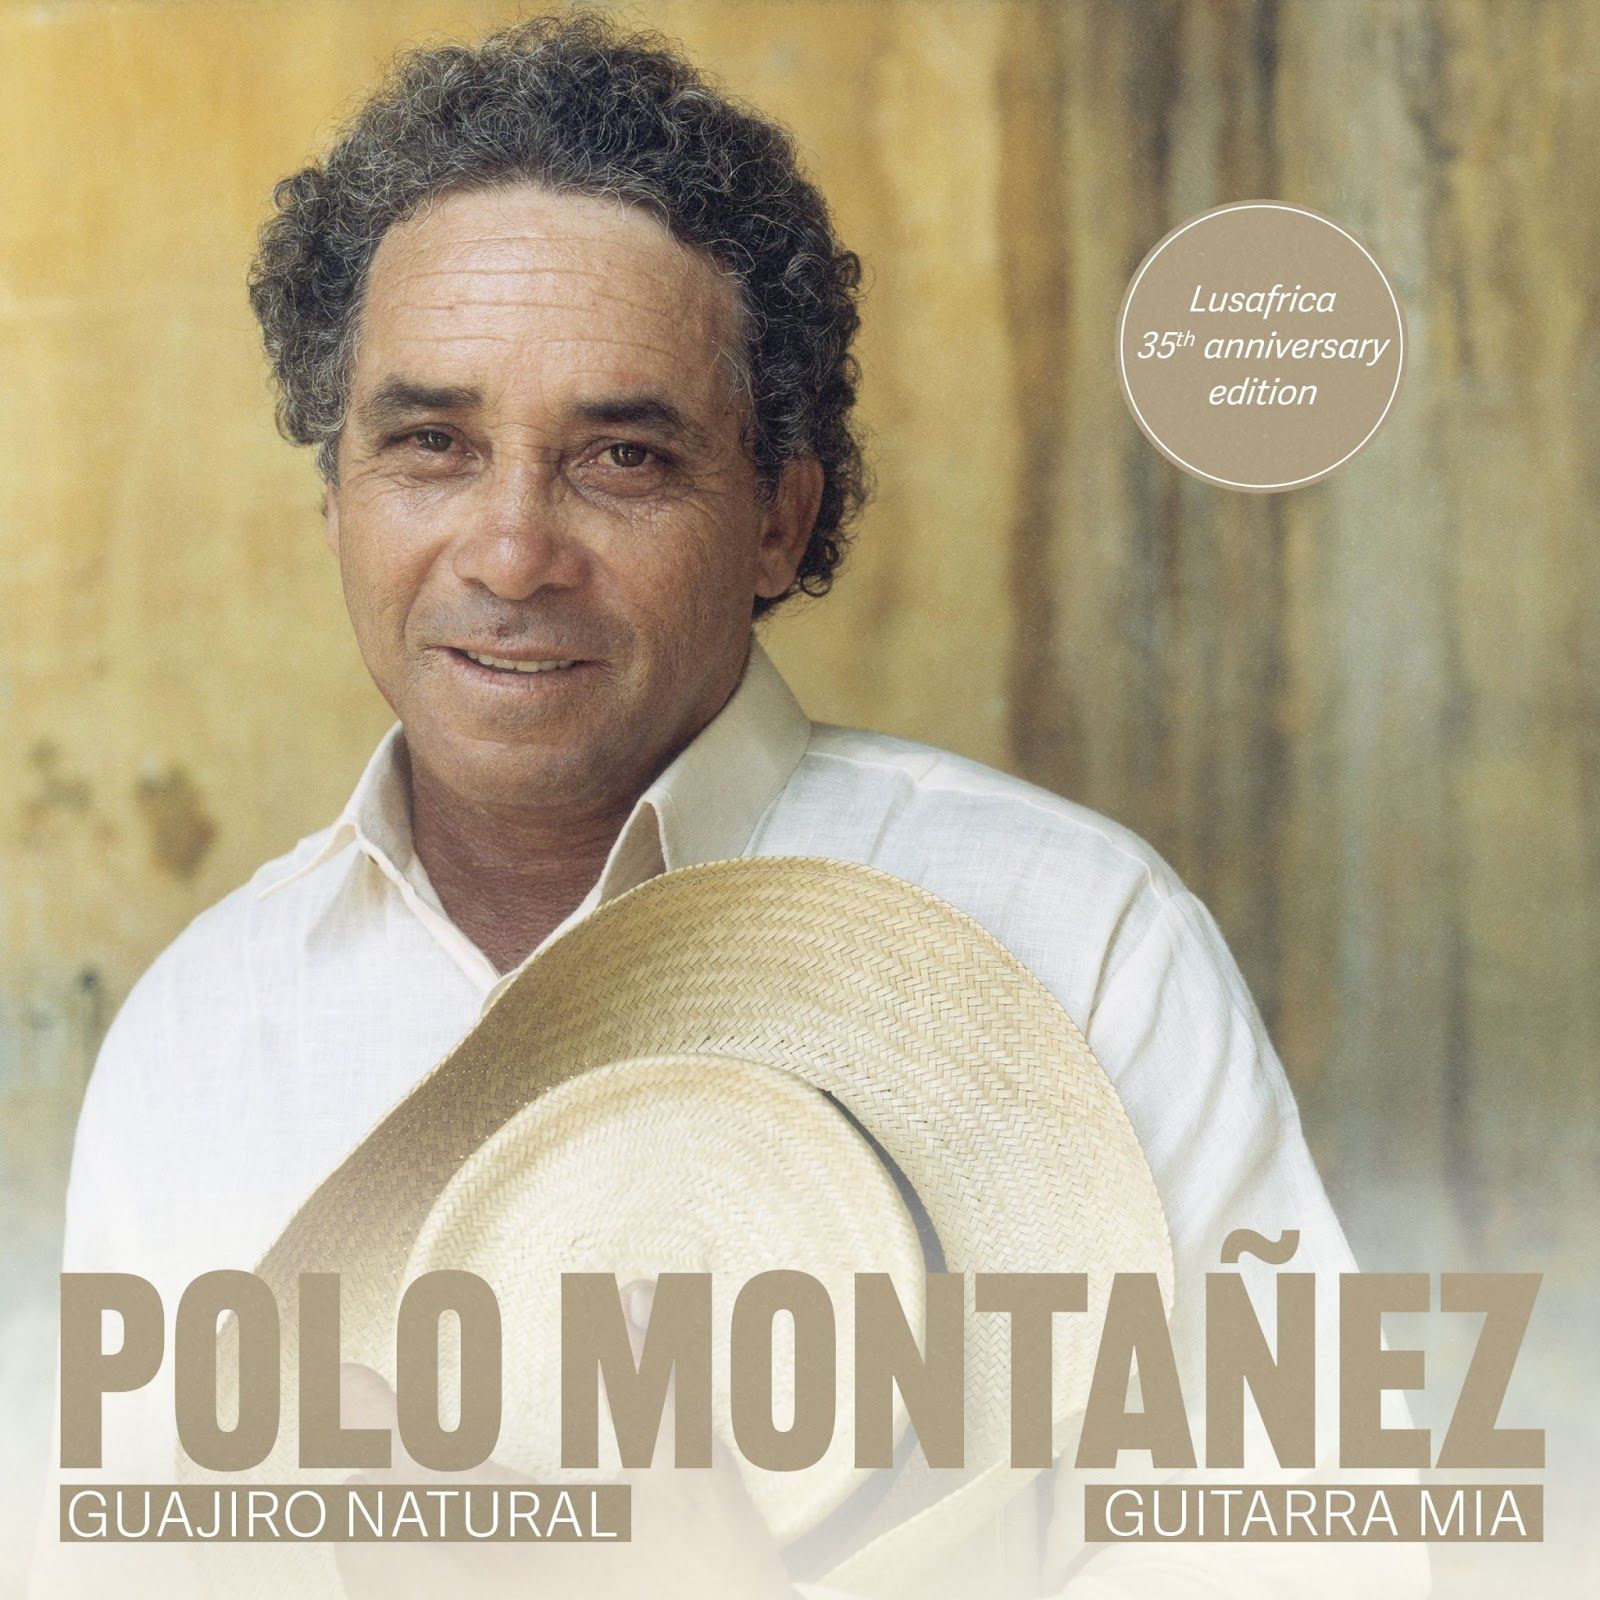 Polo Montañez - "Guajiro Natural / Guitarra Mia" - Lusafrica 35th Anniversary Edition